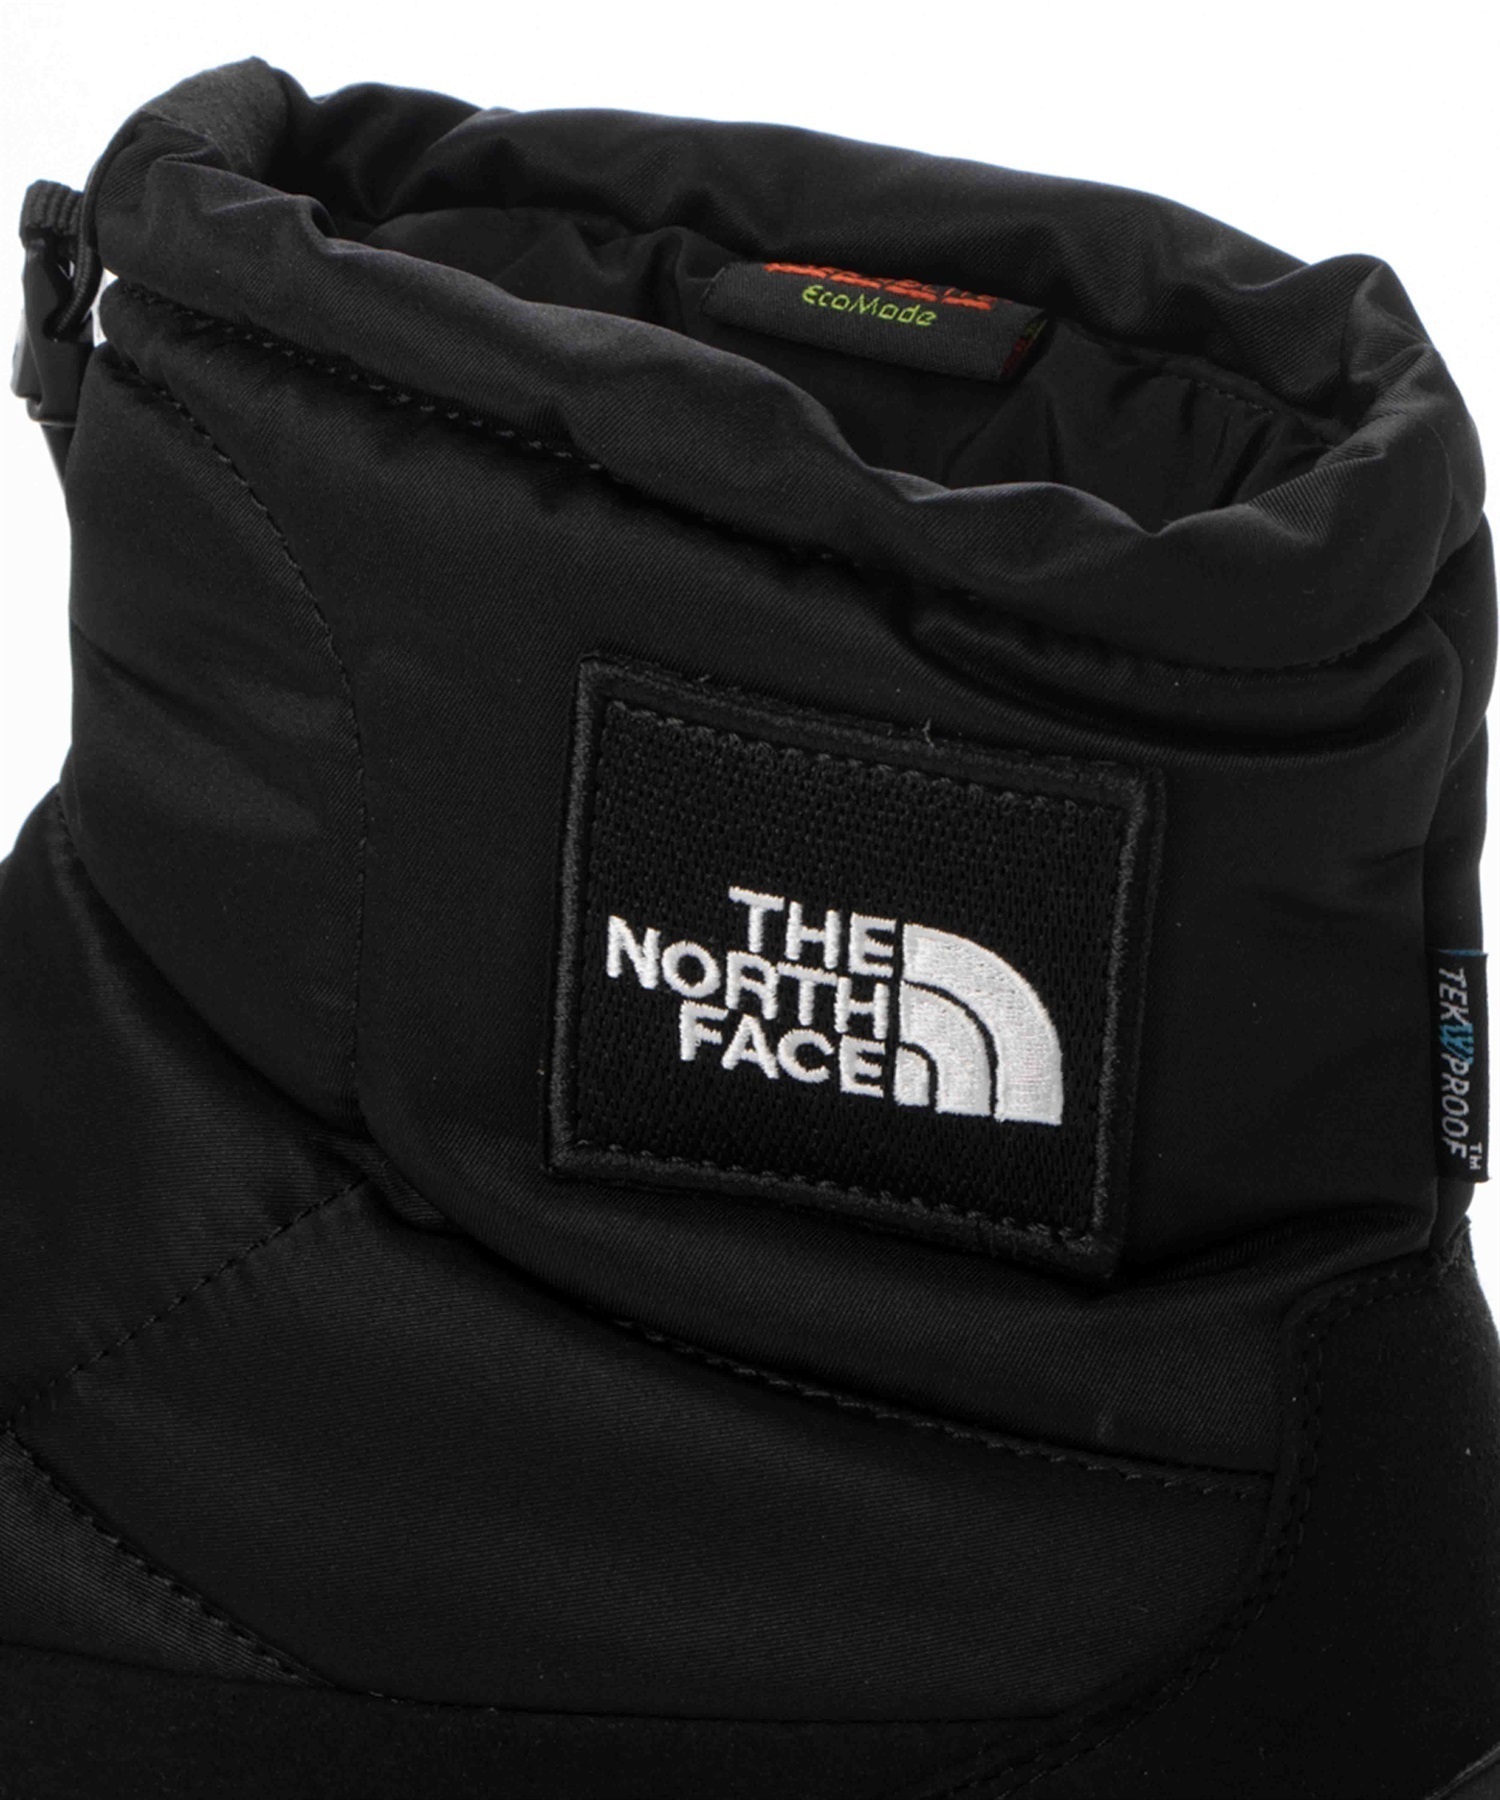 THE NORTH FACE/ザ・ノース・フェイス ヌプシ ブーティ ウォータープルーフ ロゴ ショート ブーツ NF52280 KK(KK-23.0cm)